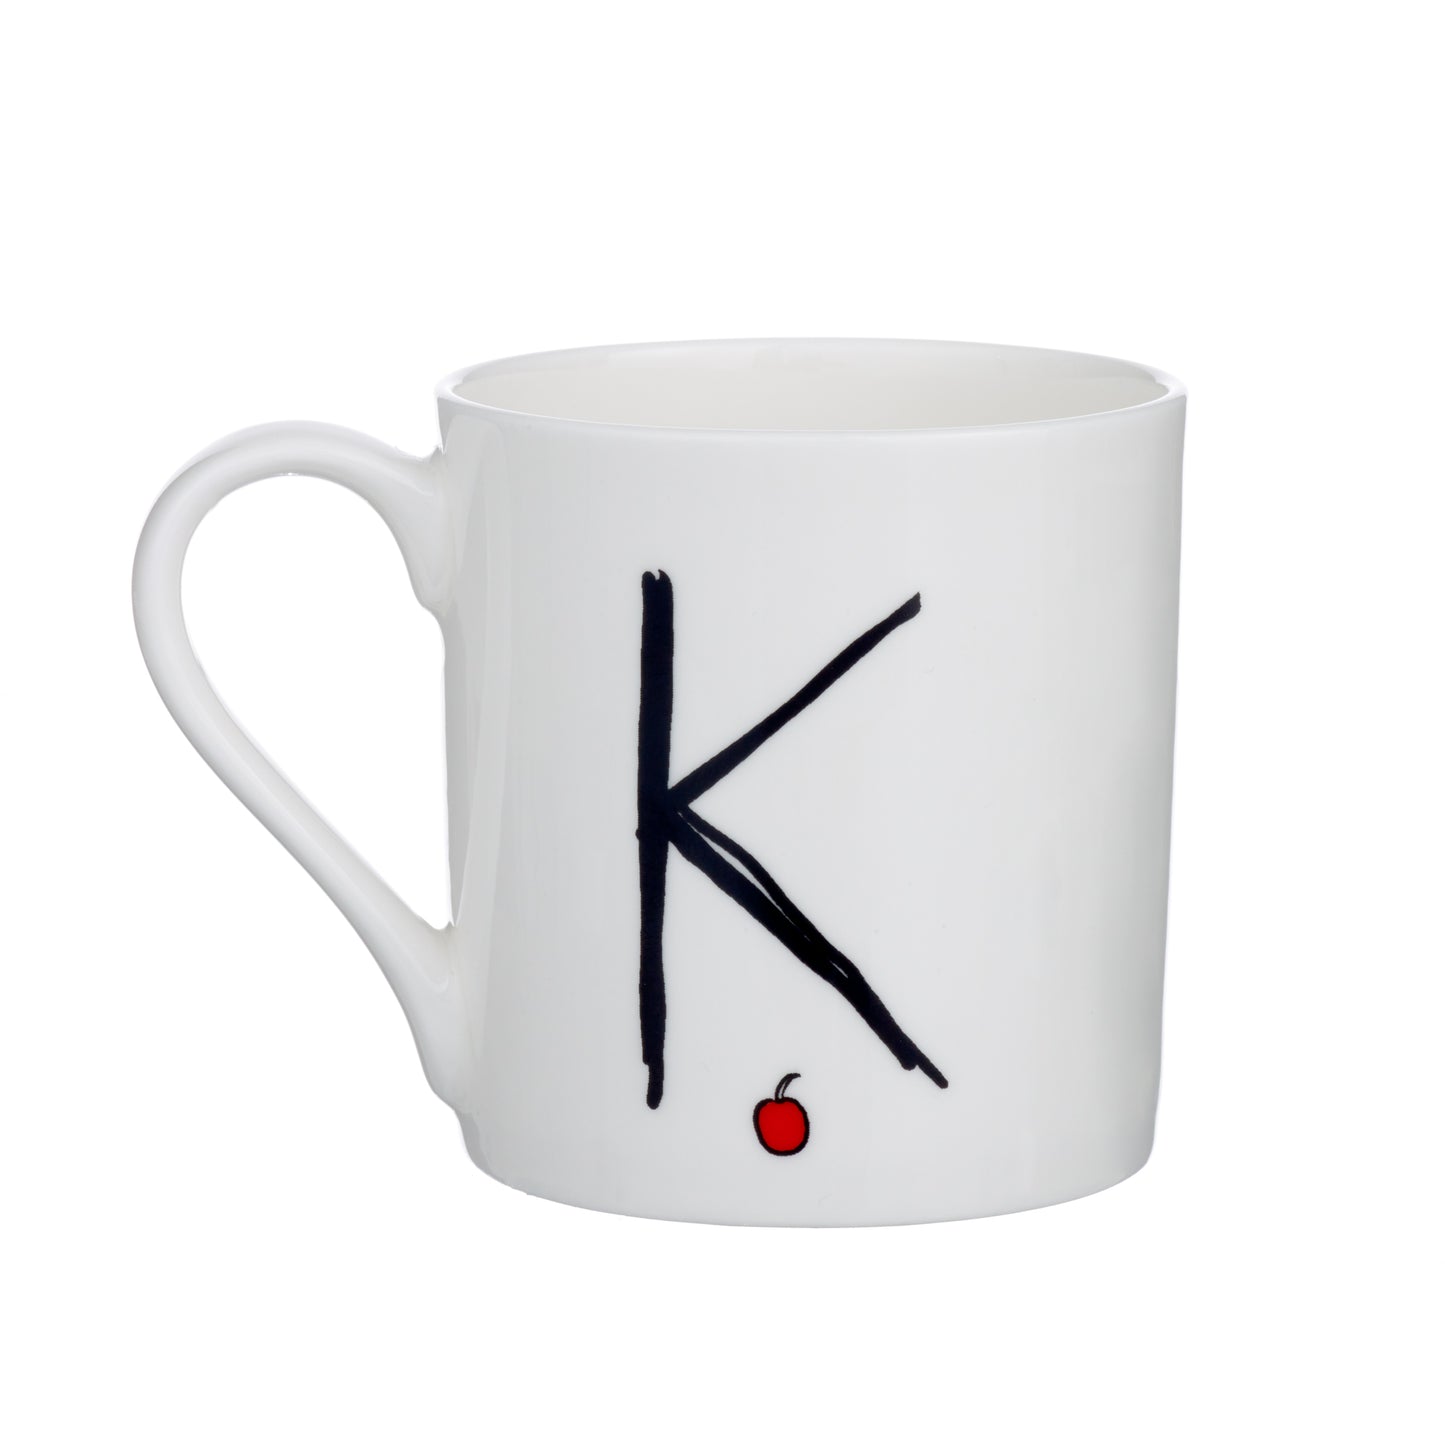 K - Alphabet of Snacking Animals Mug